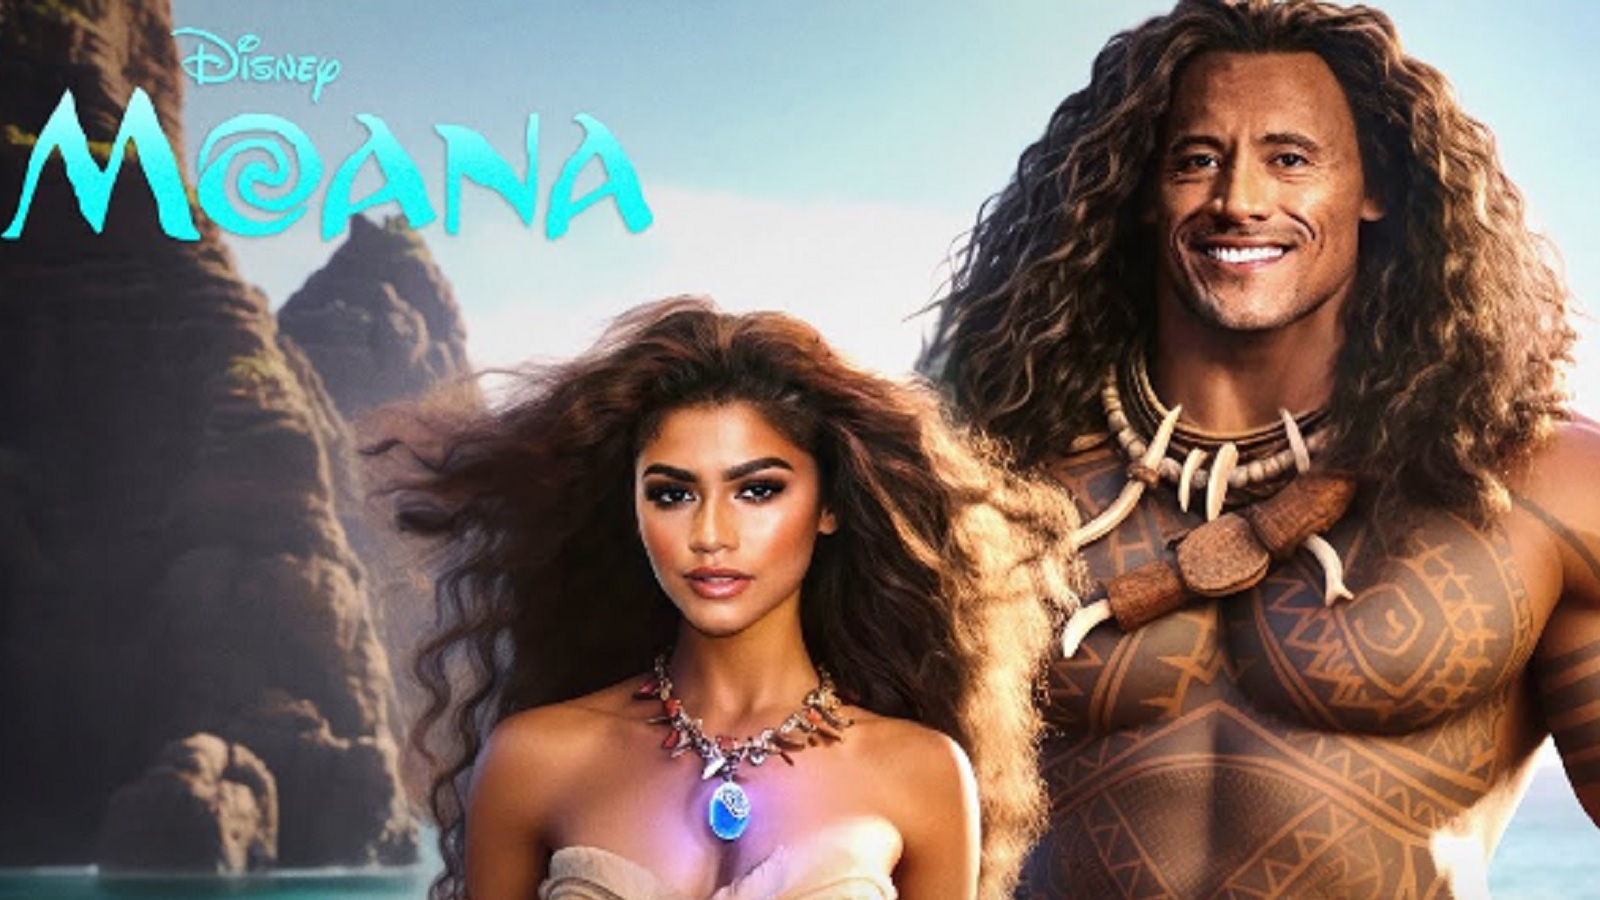 Oceania: Fan-made trailer featuring Dwayne Johnson and Zendaya goes viral